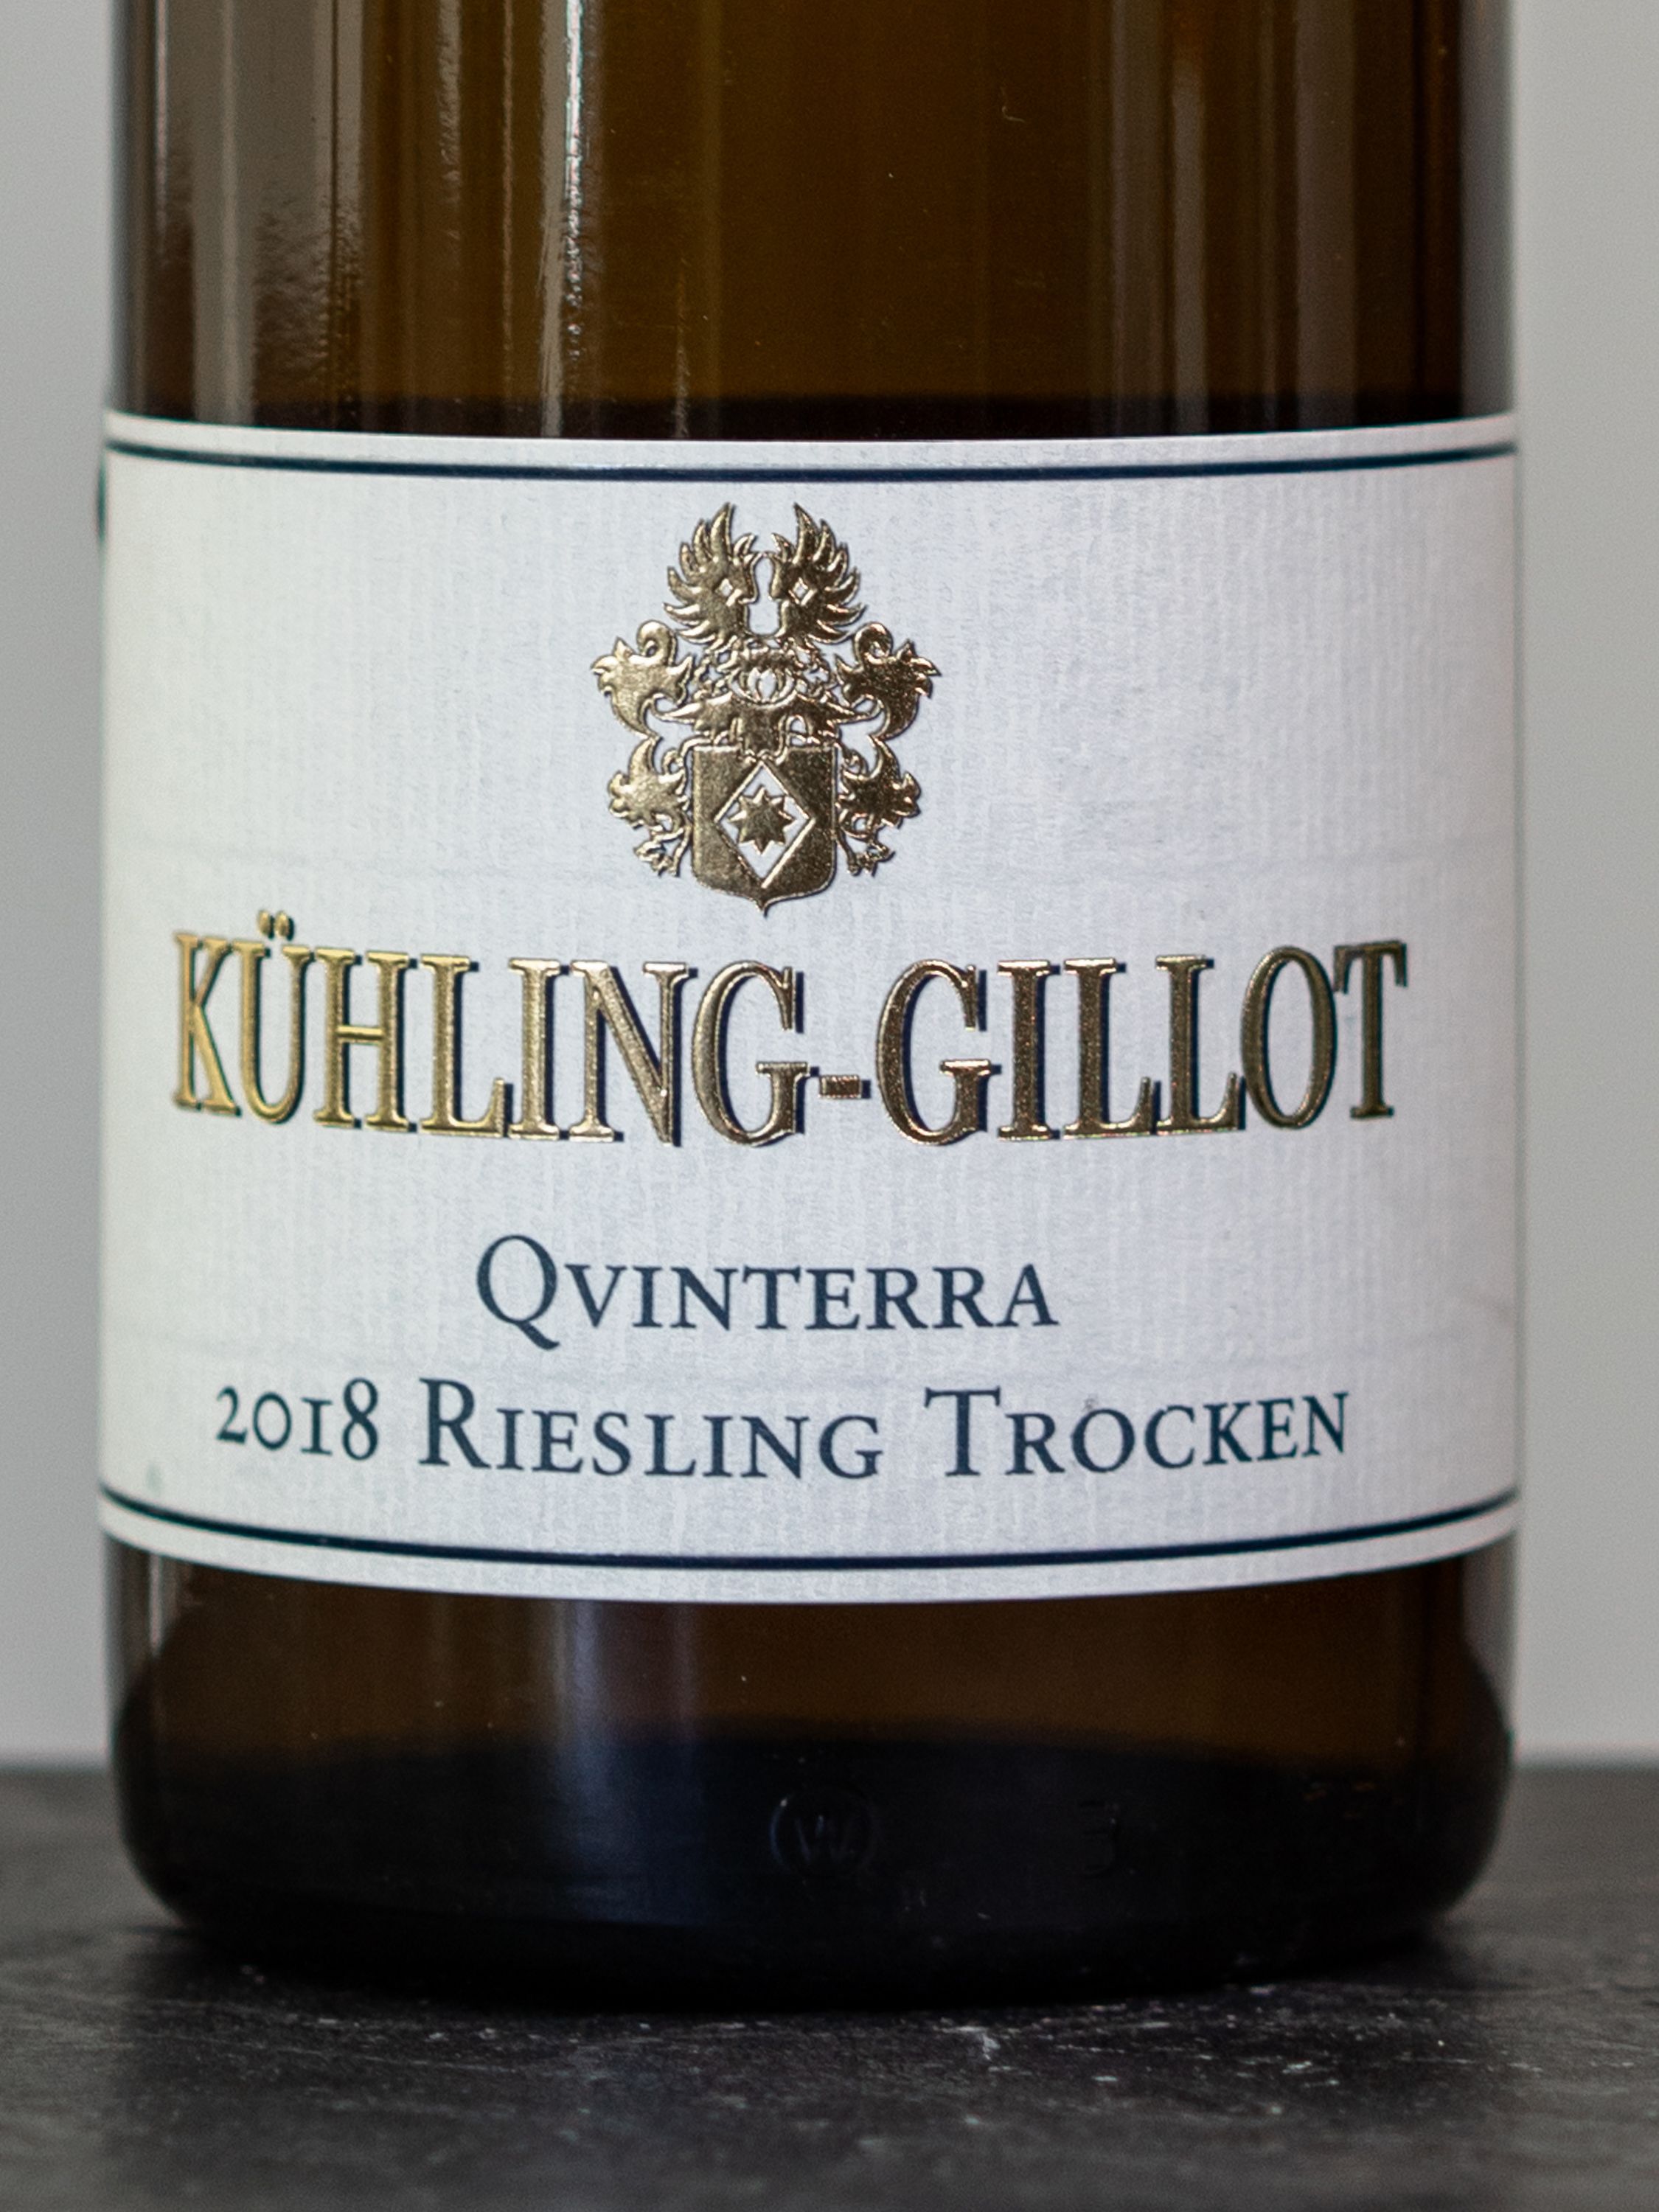 Вино Kuhling-Gillot Qvinterra Riesling Trocken / Кюлинг-Гиллот Квинтера Рислинг Трокен